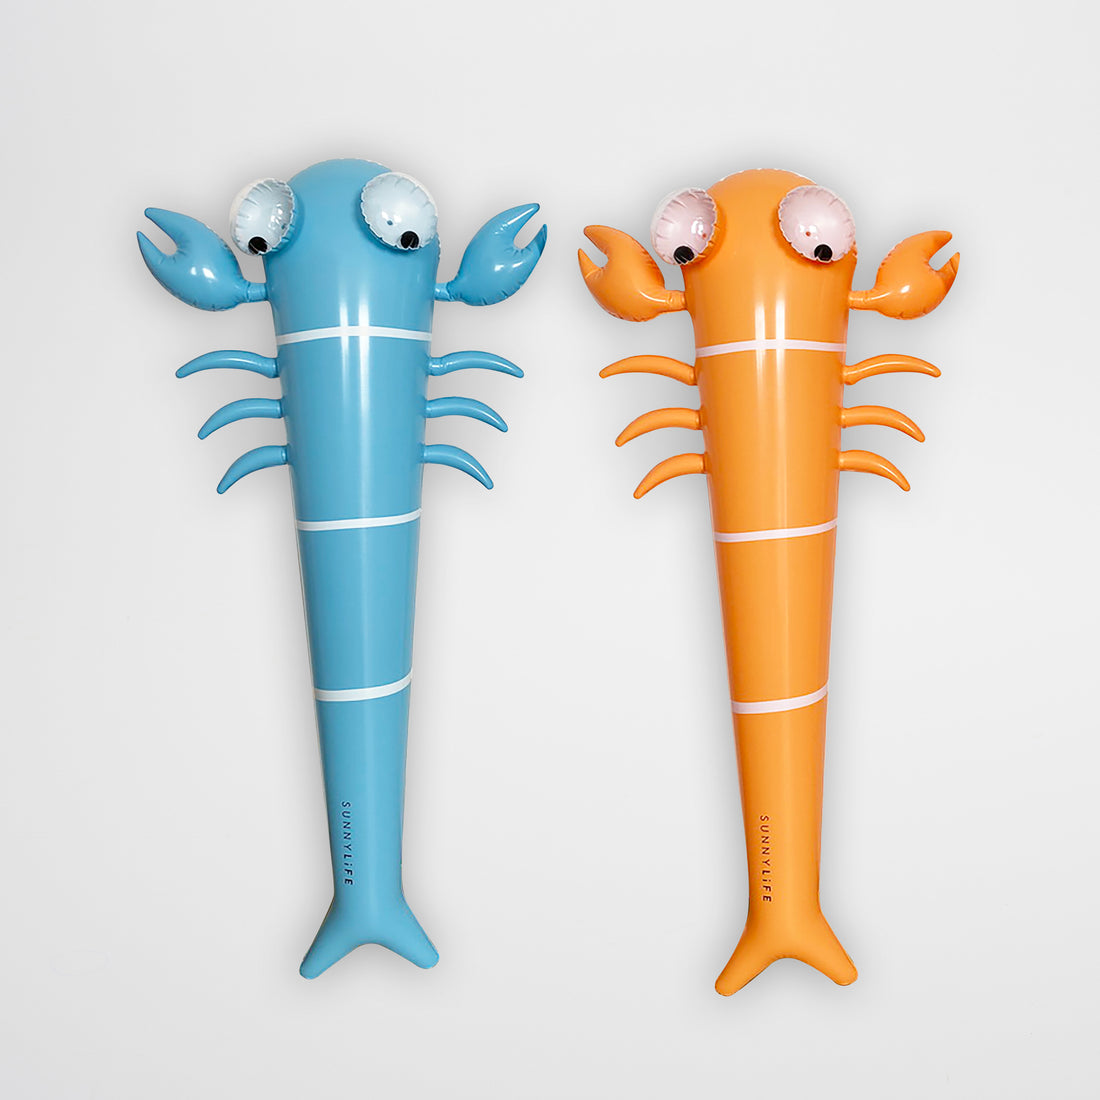 sunnylife-kids-inflatable-noodle-sonny-the-sea-creature-neon-orange-sunl-s3pknoso- (1)